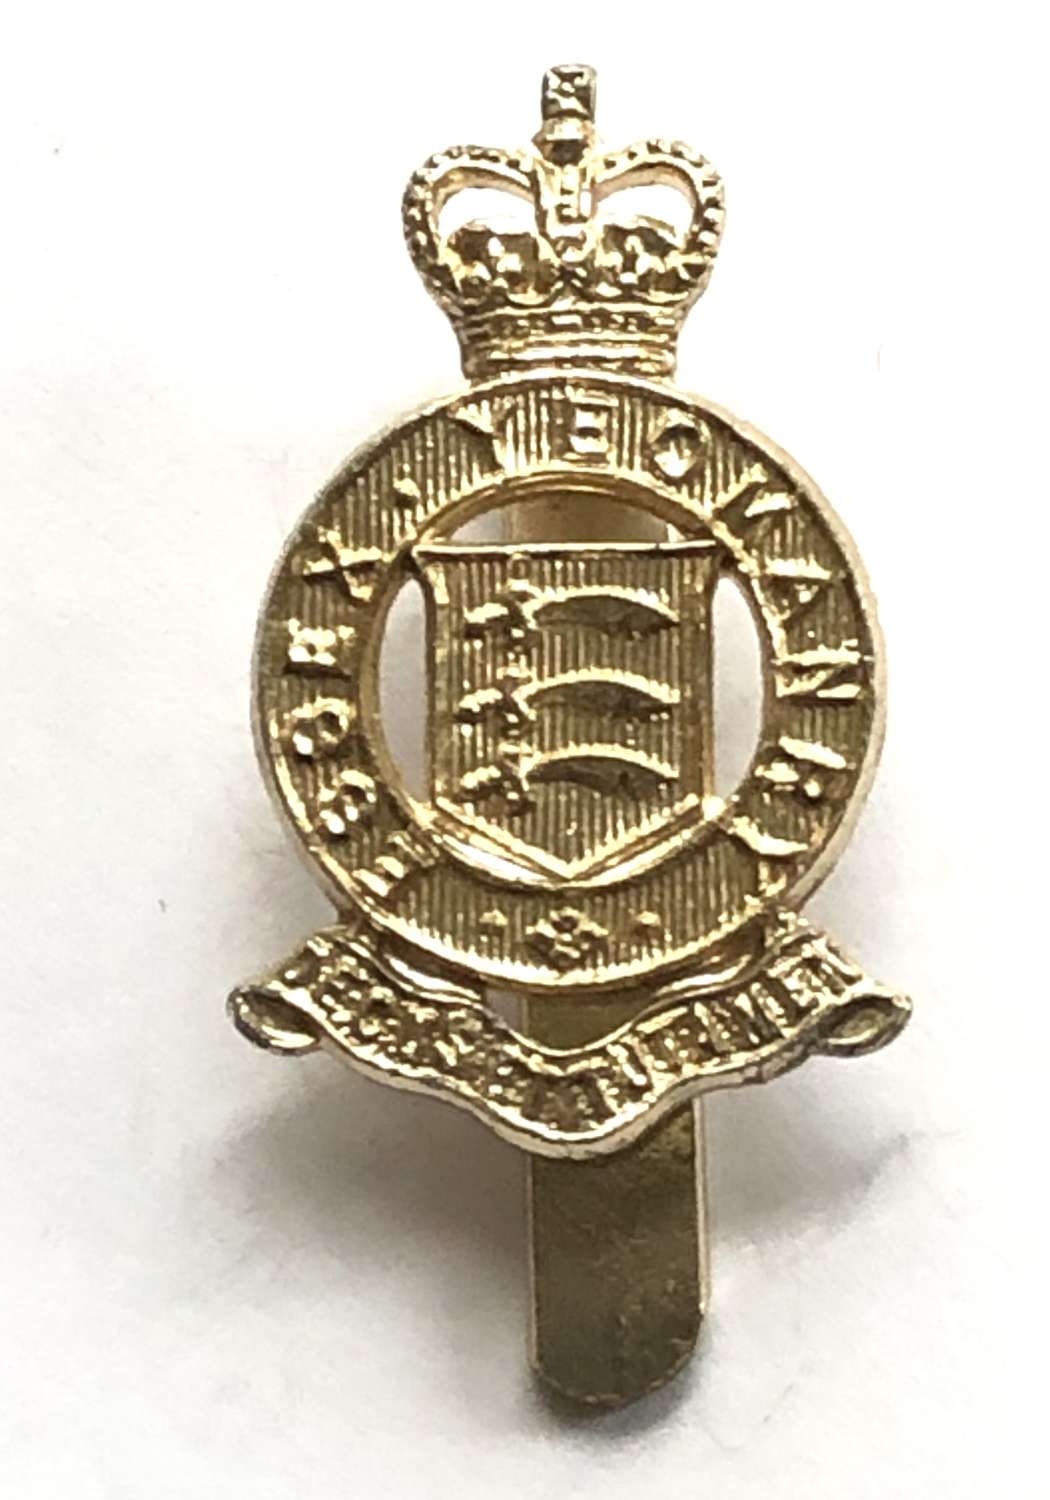 Essex Yeomanry anodised 1960's beret badge by JR Gaunt, B'ham